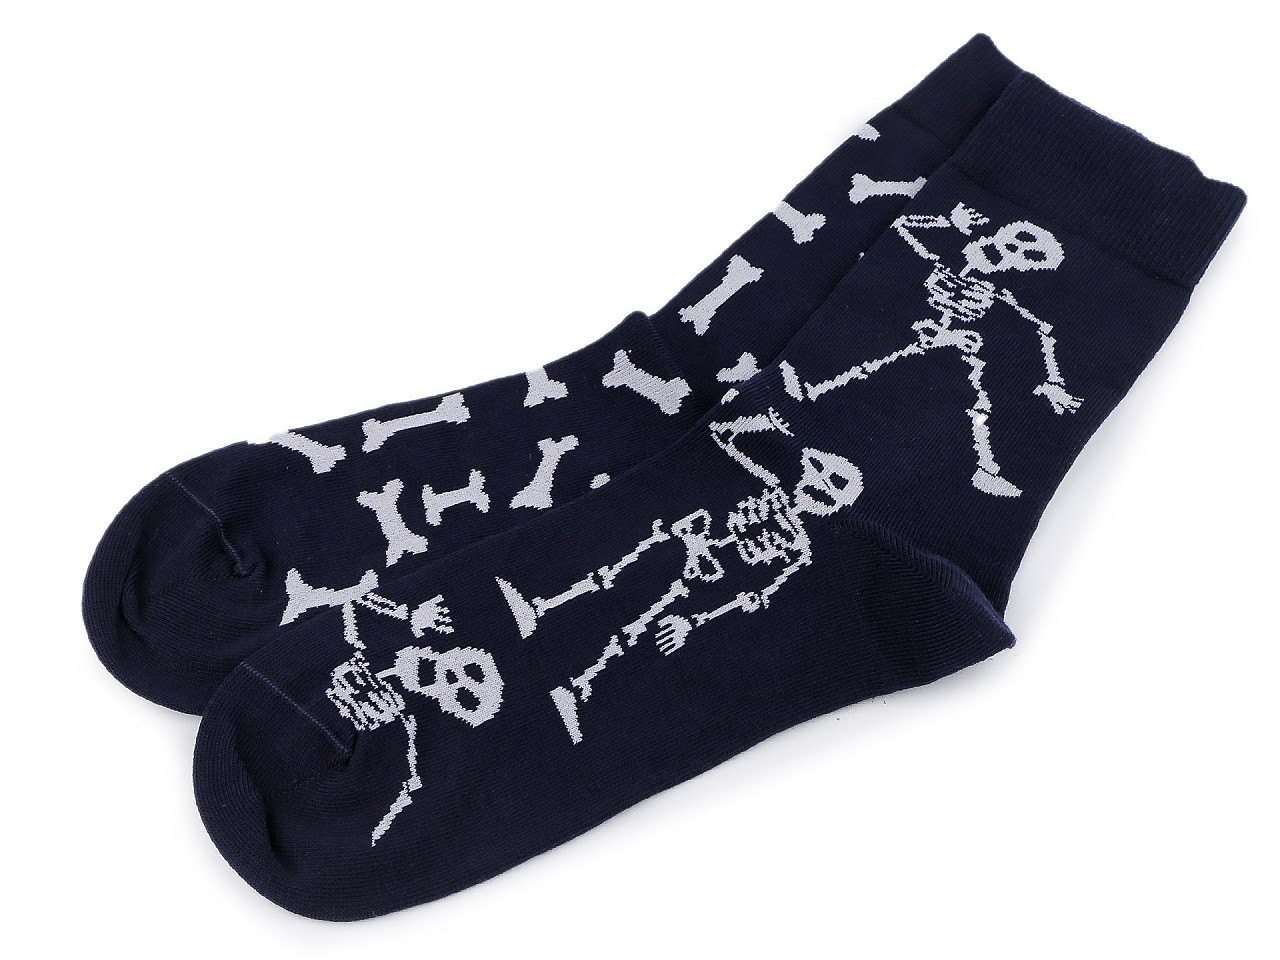 Wola lustige Socken, Baumwolle, (43-46), dunkelblau, 1 Paar